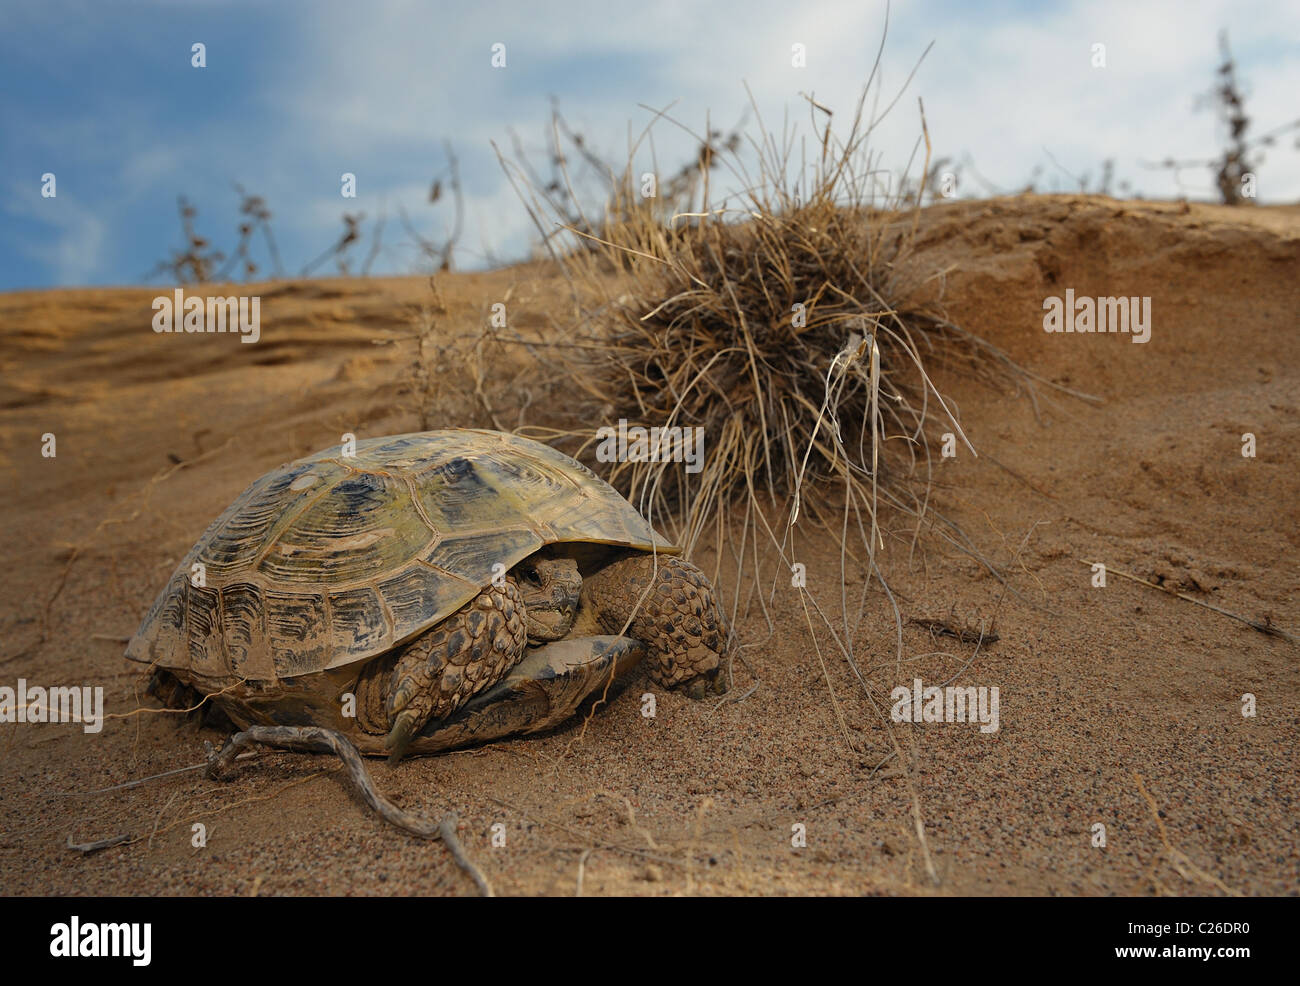 The Russian Tortoise in sand desert. Stock Photo